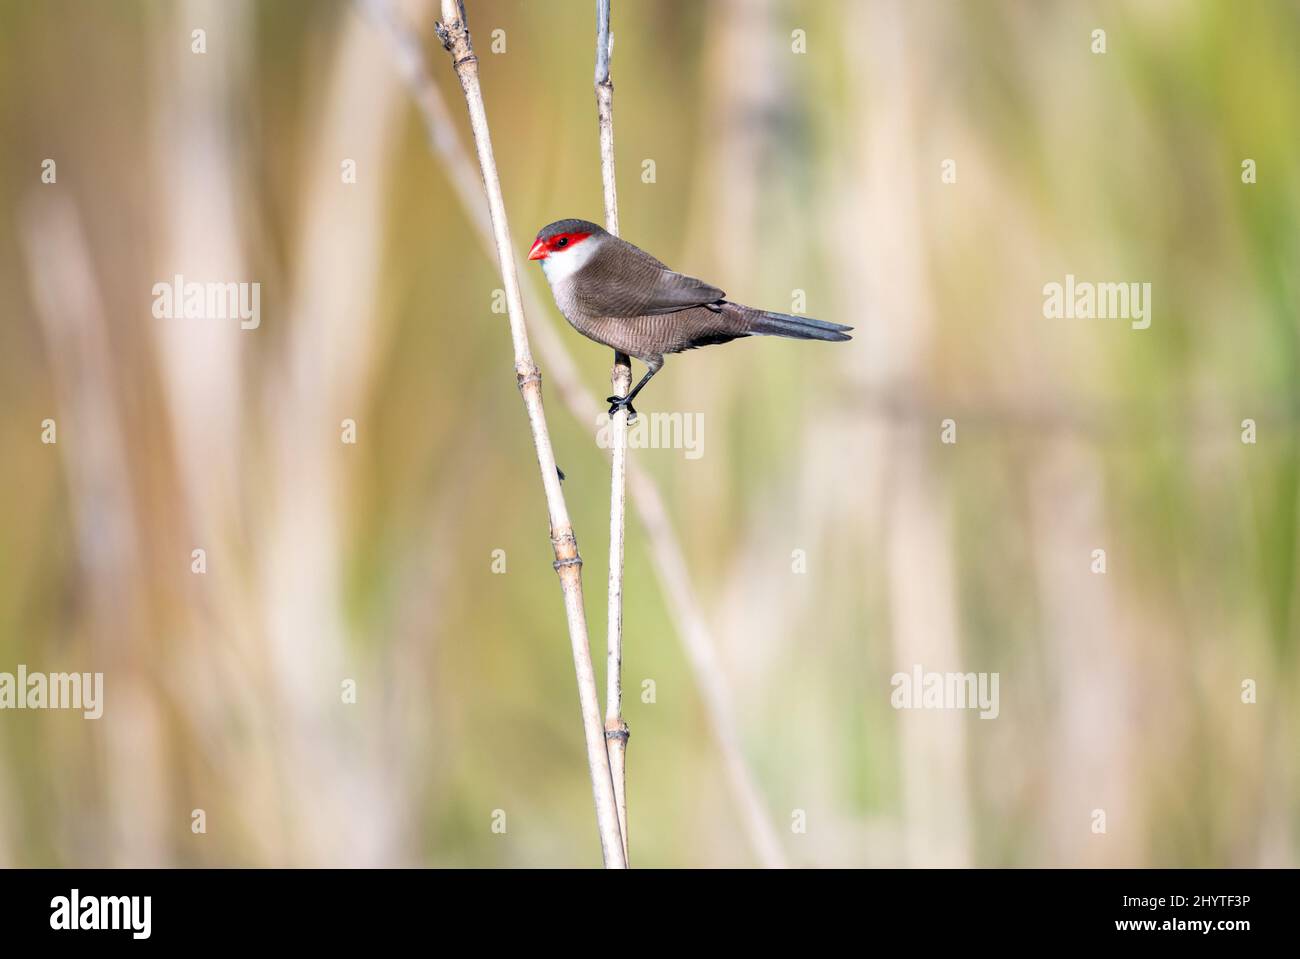 Common Waxbill bird, Estrilda astrild, perched in reeds in the bright sunlight in Trinidad and Tobago. Stock Photo